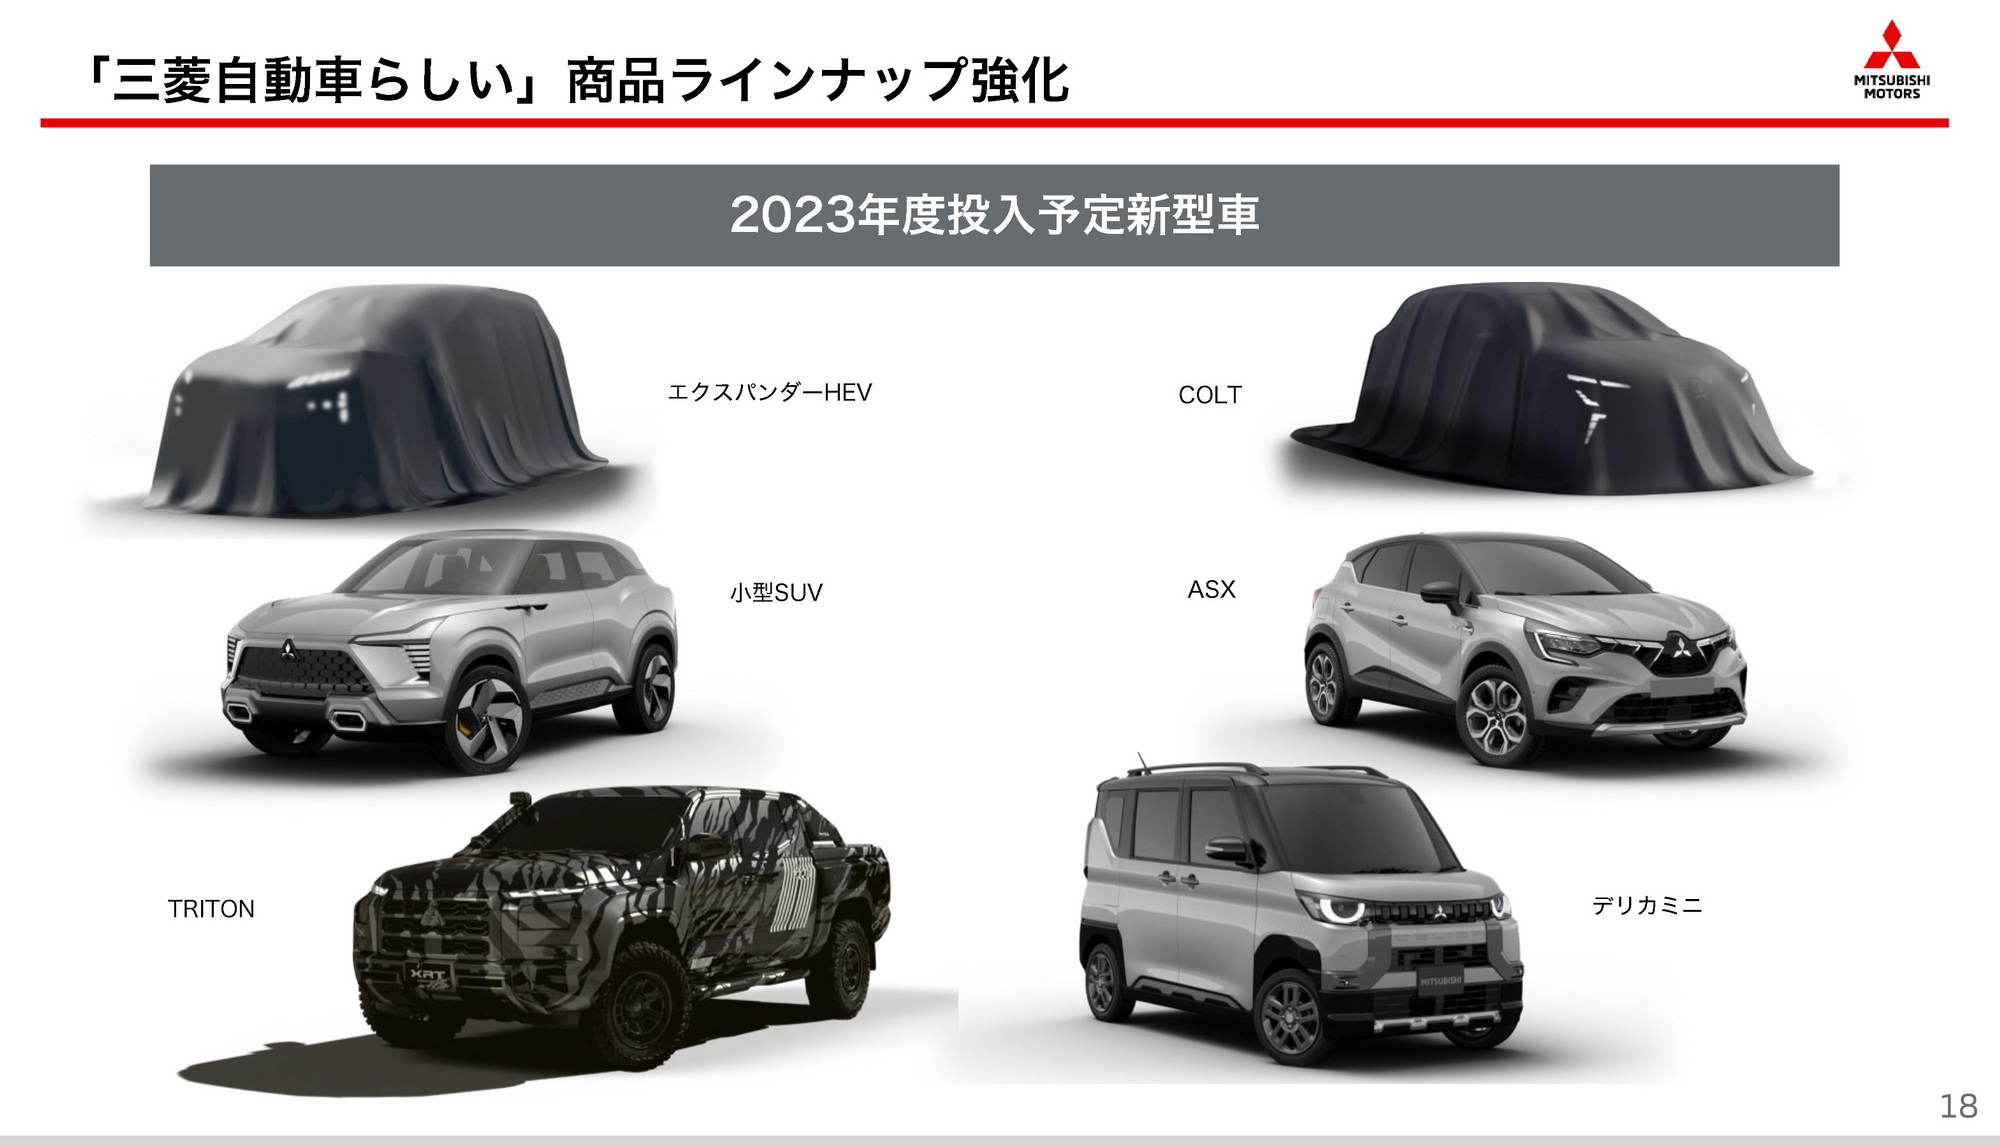 2023-Mitsubishi-Product-Plan-1.jpg